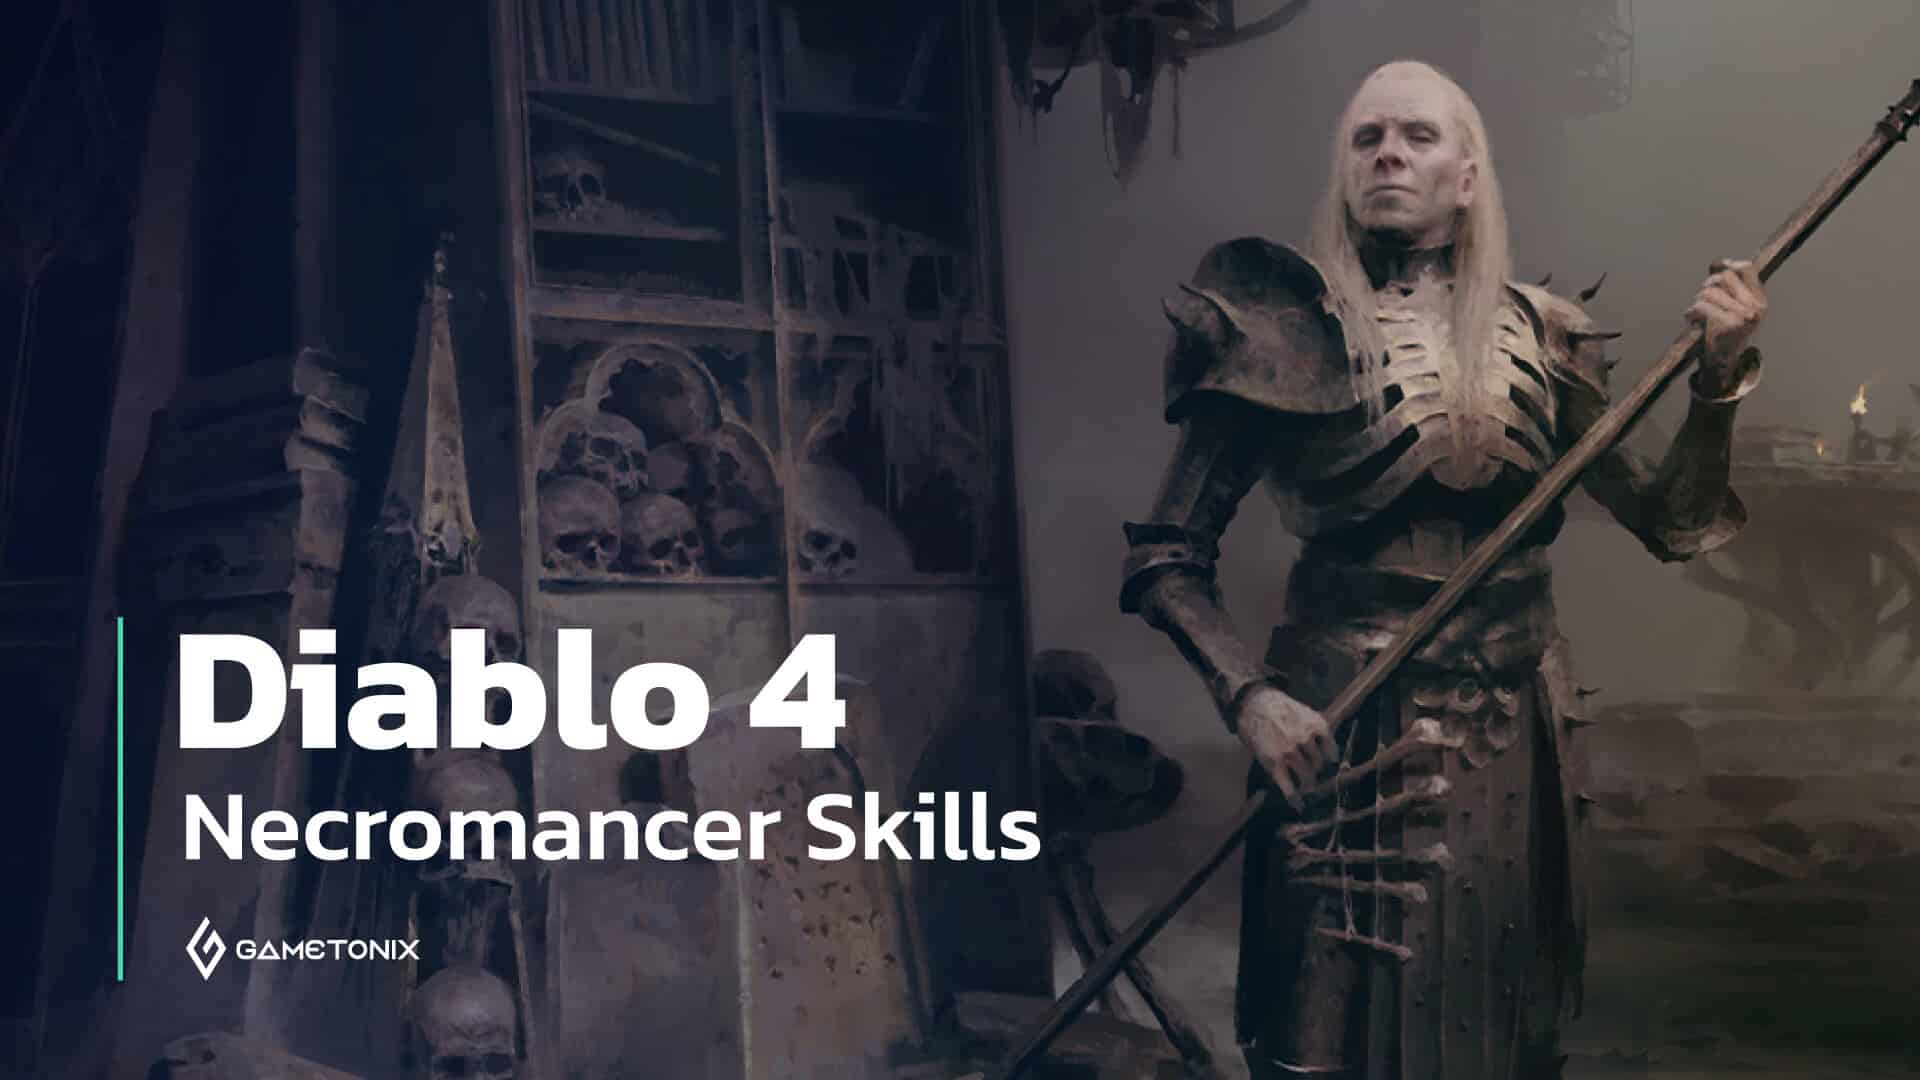 Diablo 4 Necromancer Class All Skills in Skill Tree สกิลอาชีพ Necromancer ทั้งหมด